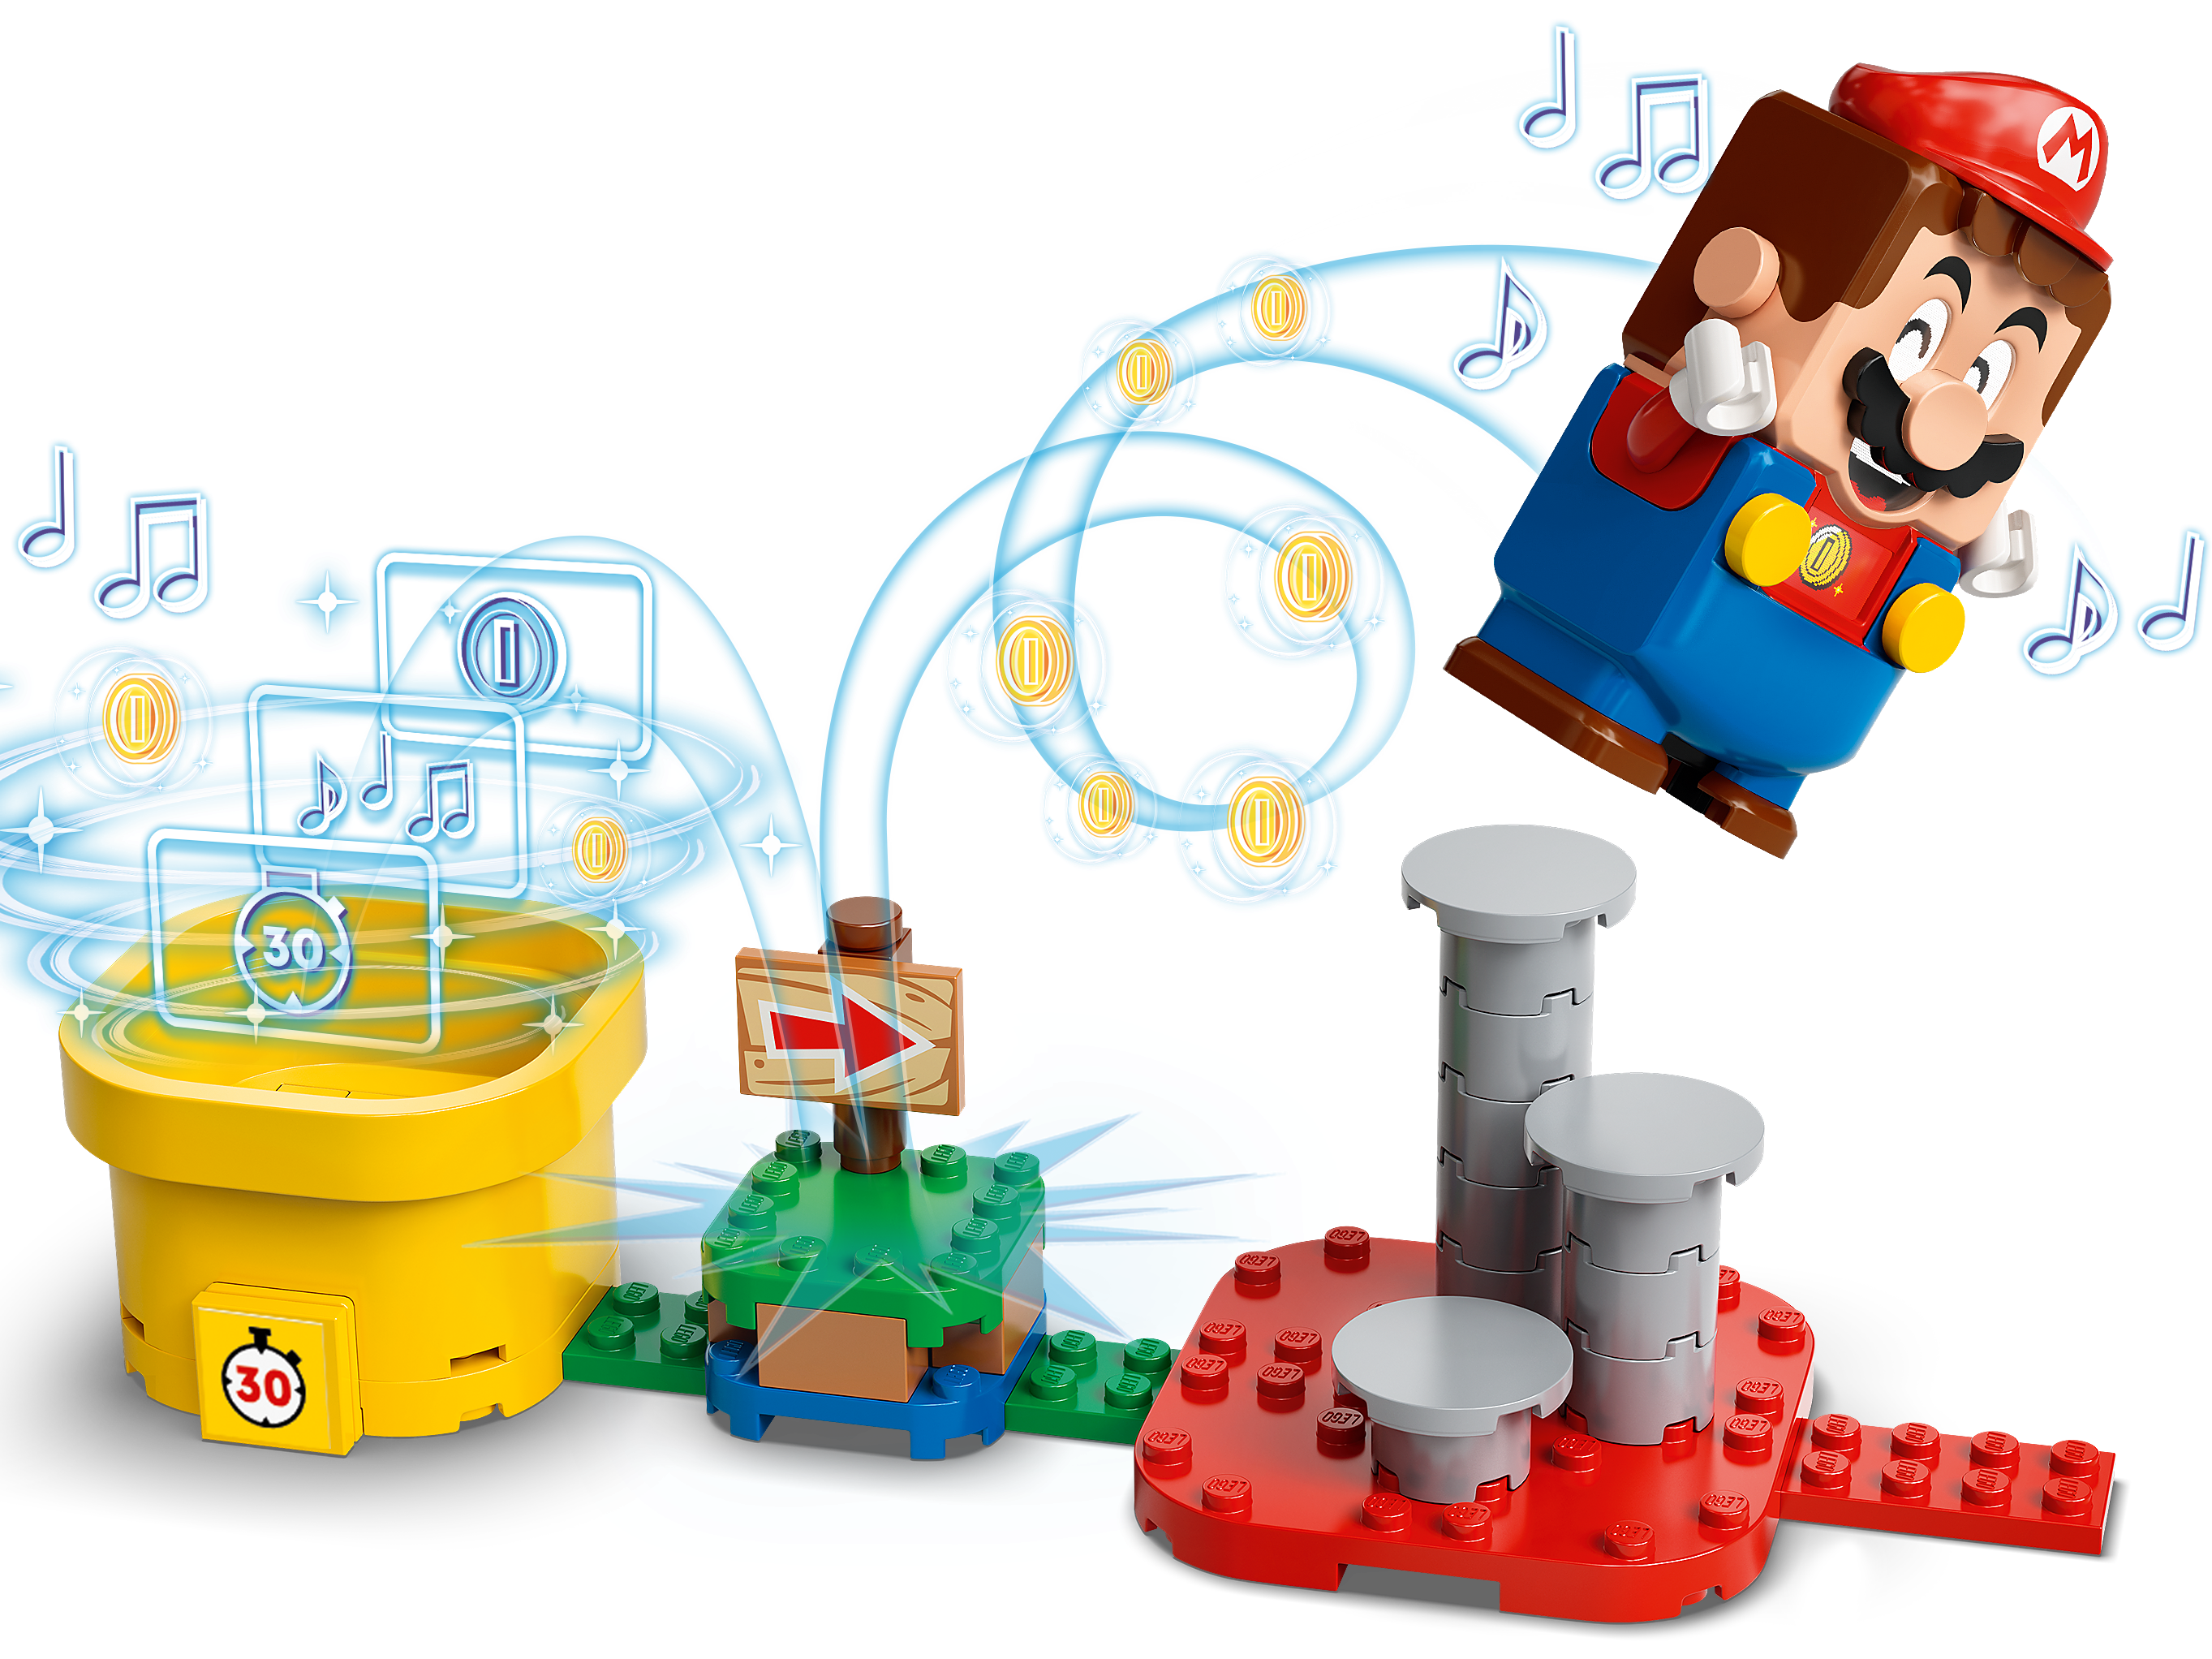 LEGO 71380 Super Mario Set de créateur Invente ton aventure - shoppydeals.fr